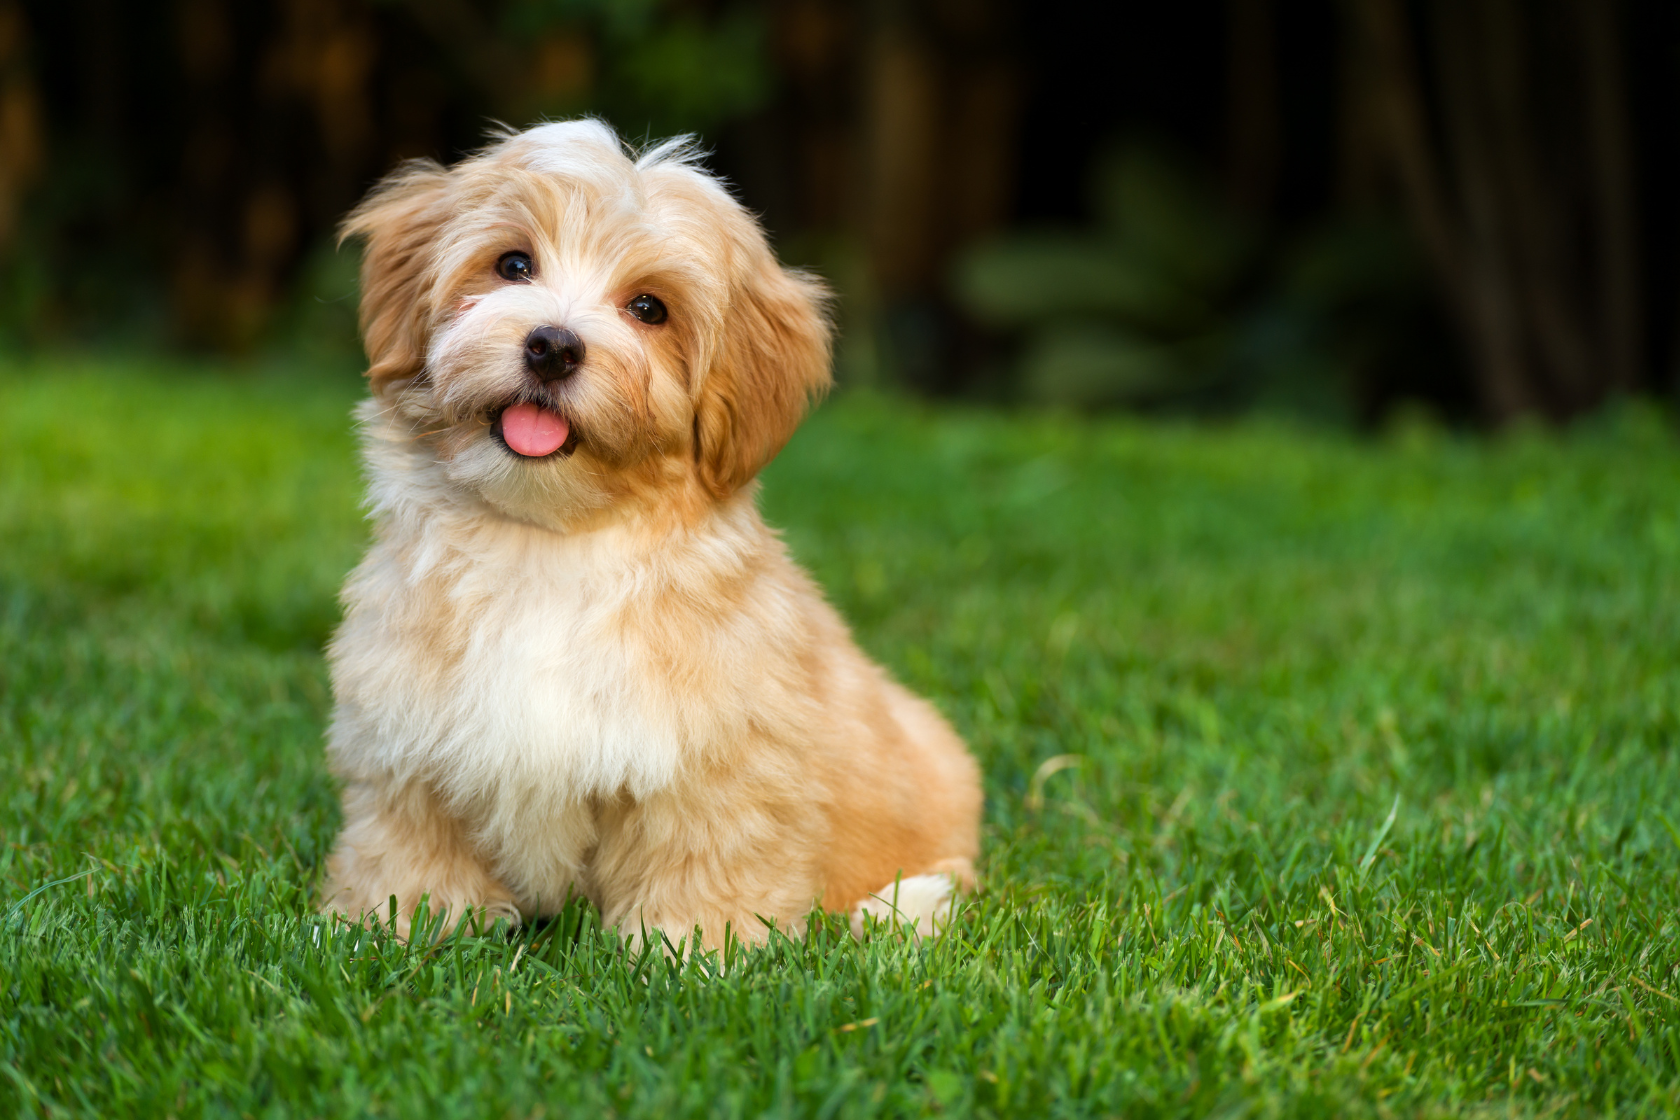 Happy fluffy dog sitting on grass